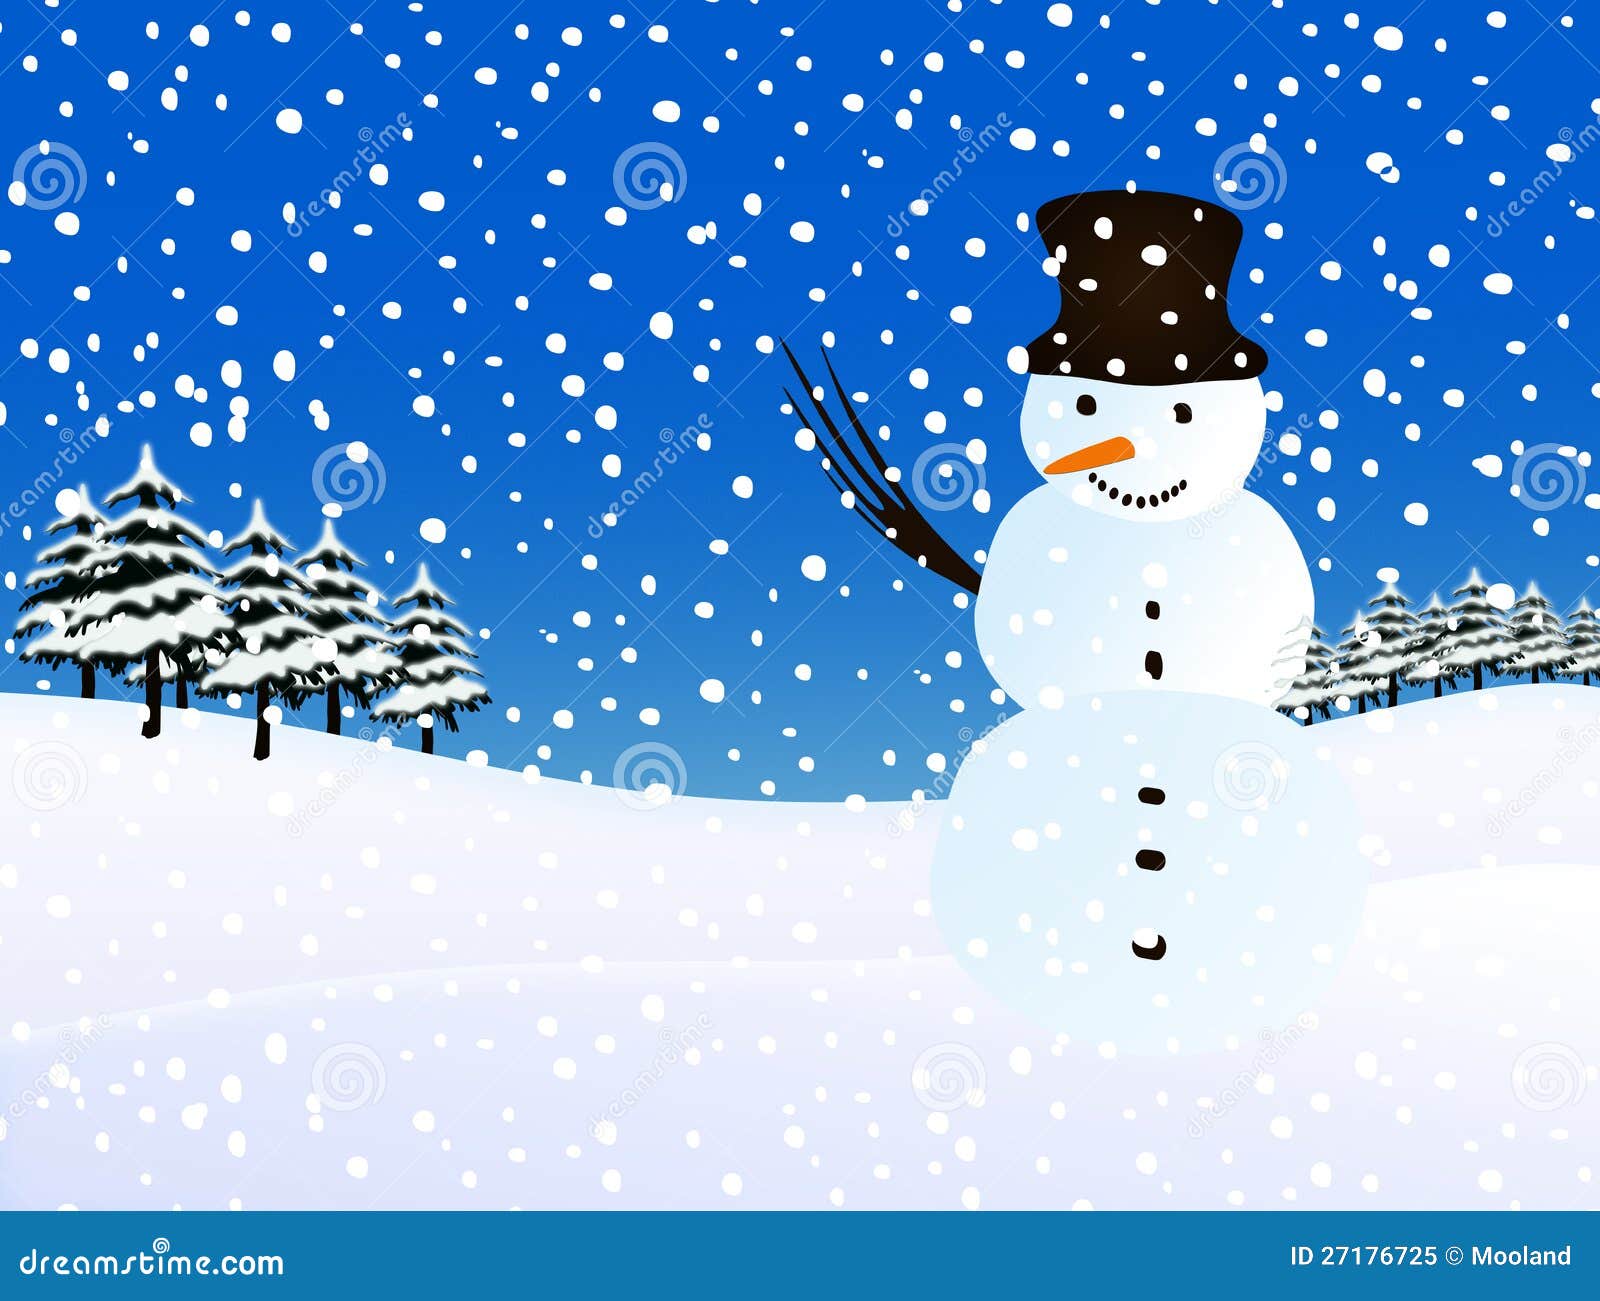 Идет снег по английски. Снеговик идет. Snowing for Kids. Snowy рисунок. 3 Класс зимний пейзаж со снеговиком.